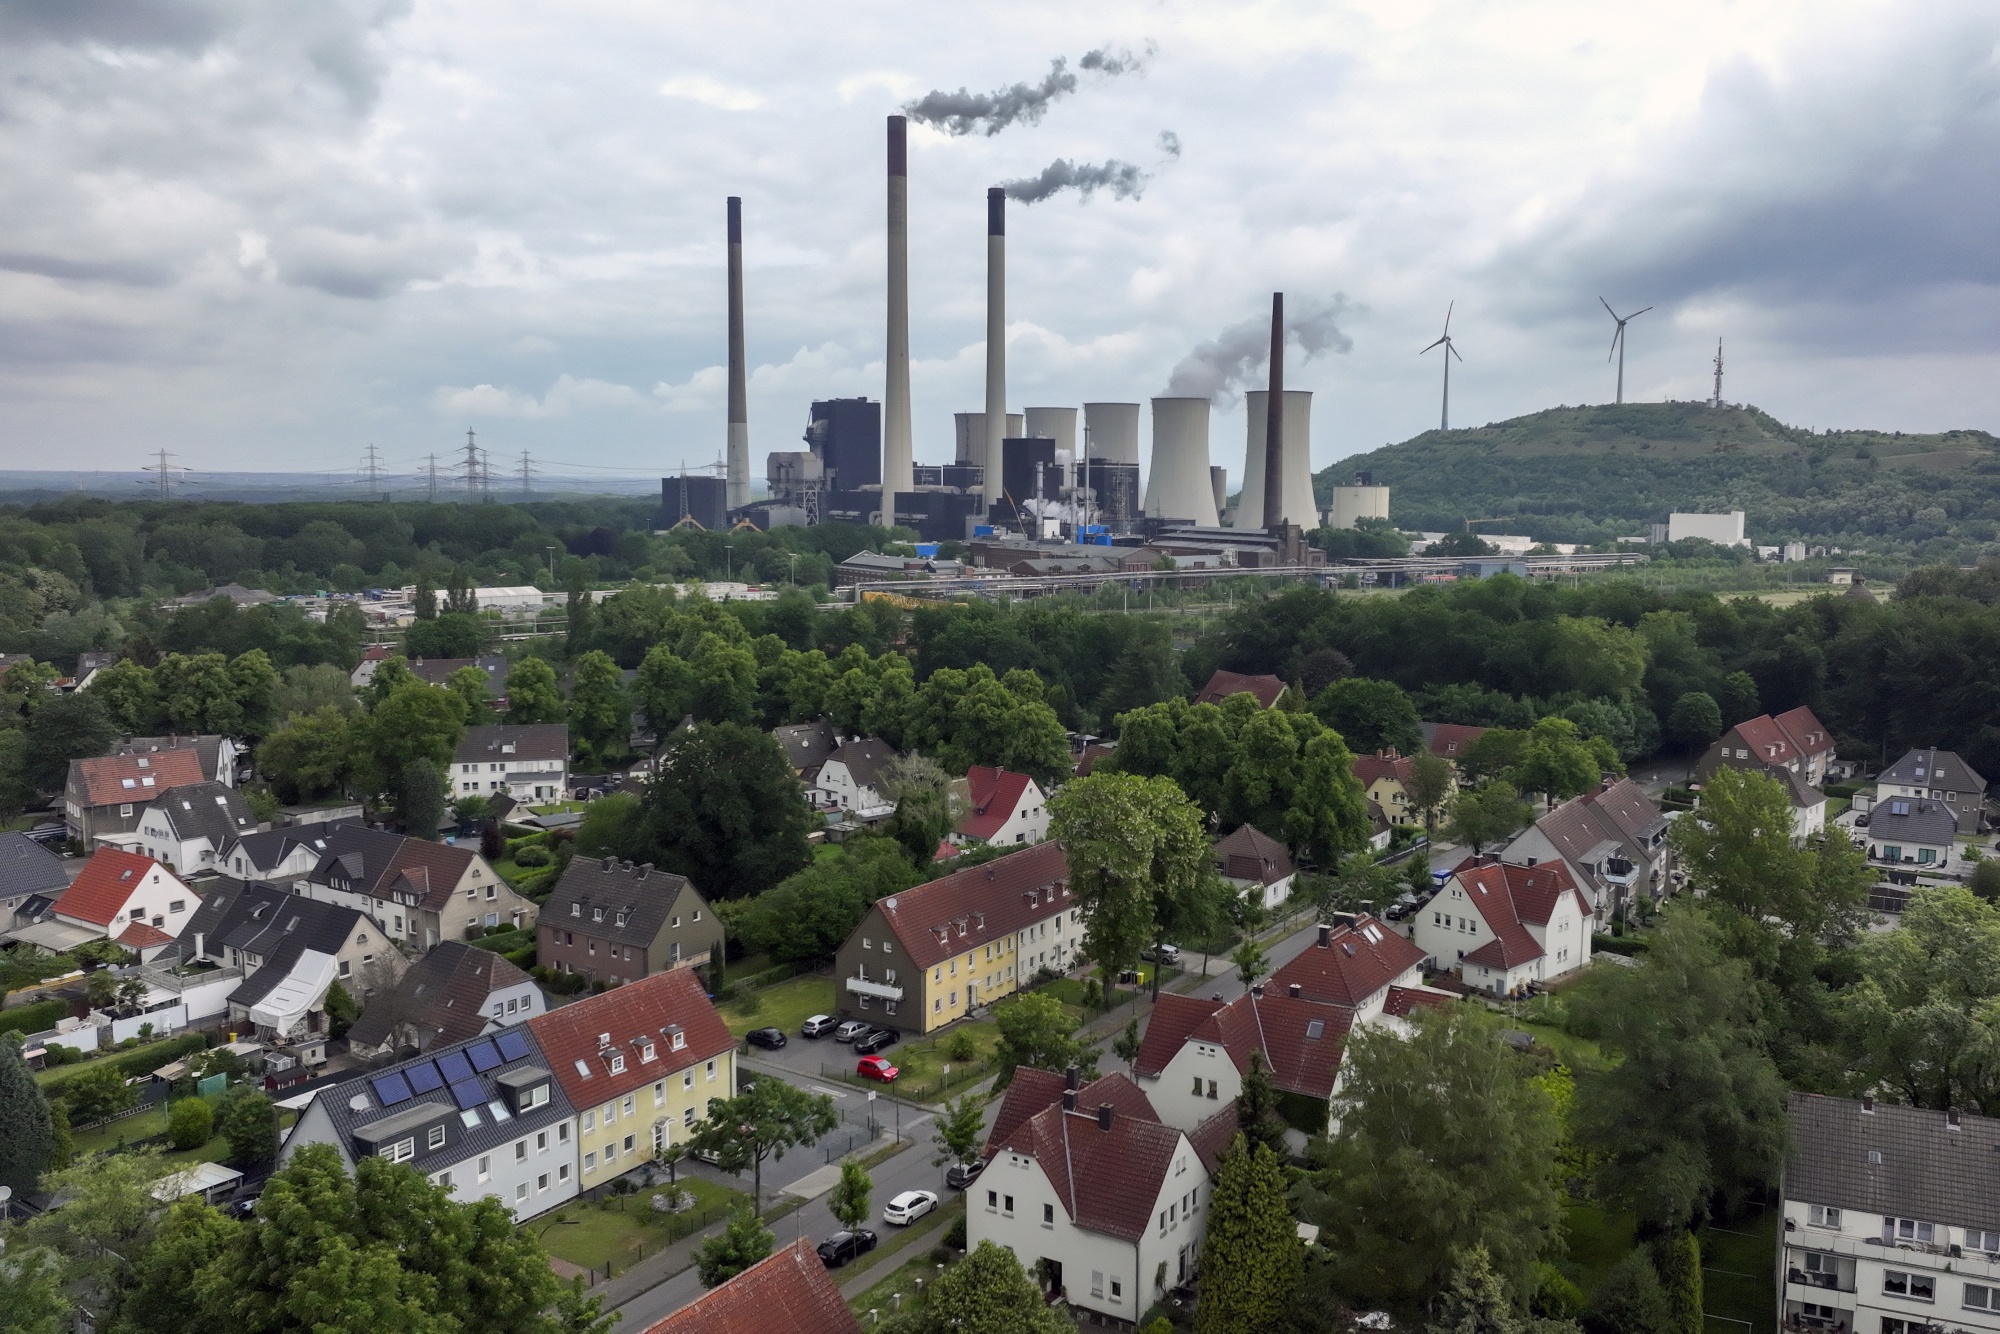 Uniper SE Power Stations in The Rhine Coal Region